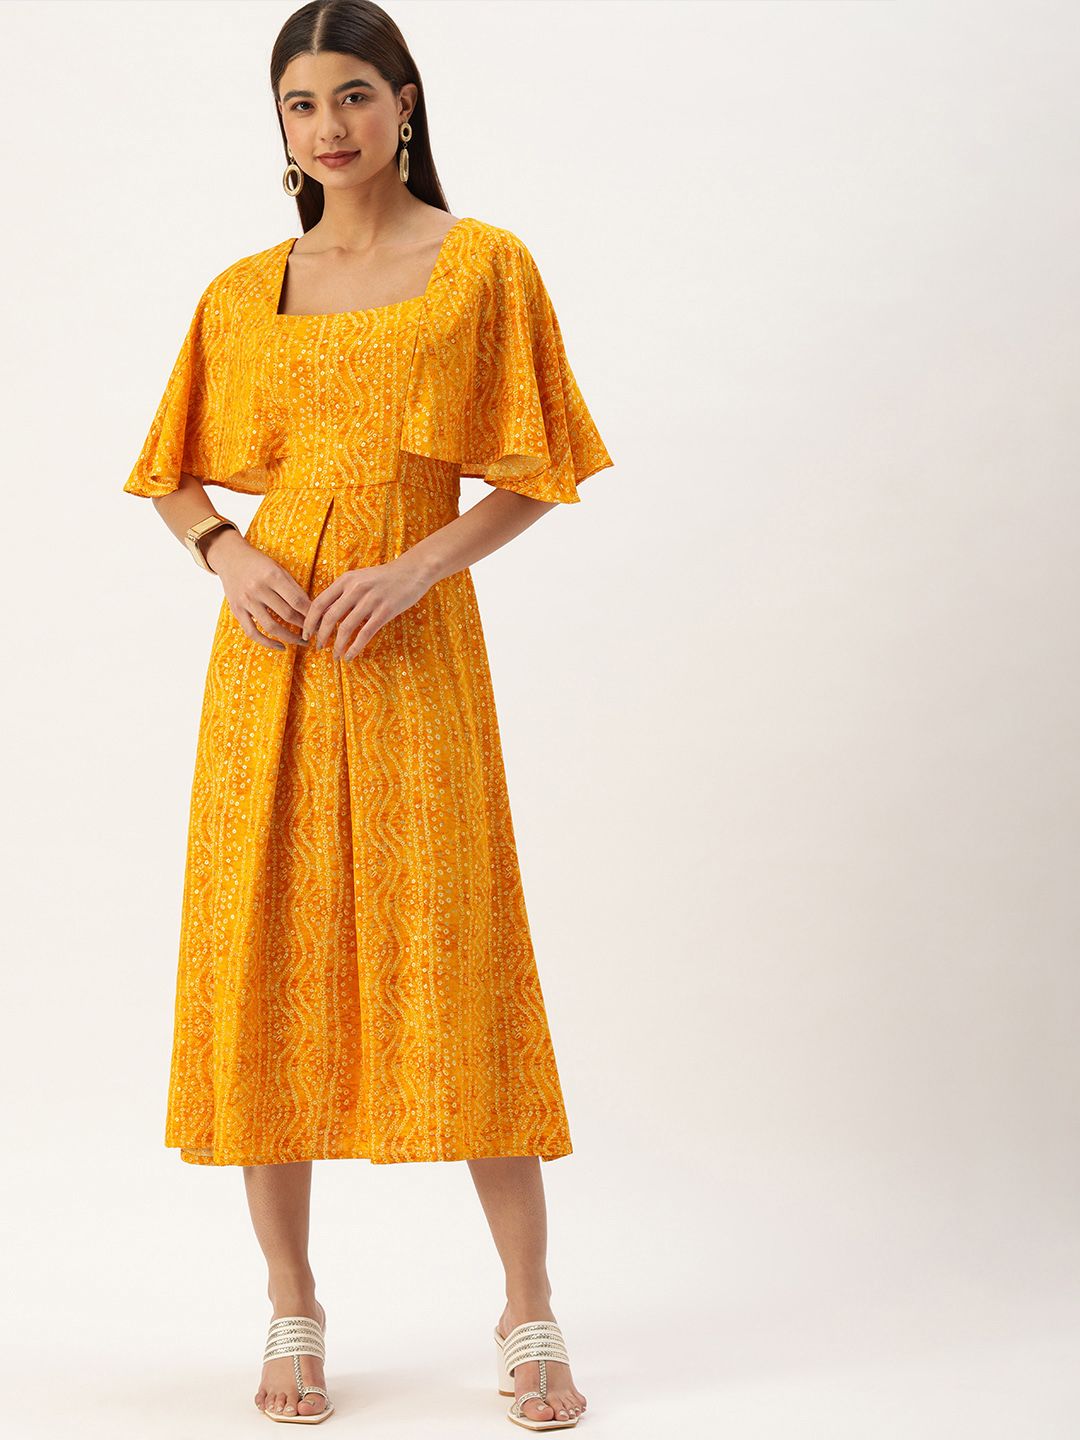 EthnoVogue Yellow Ethnic Motifs A-Line Midi Dress Price in India